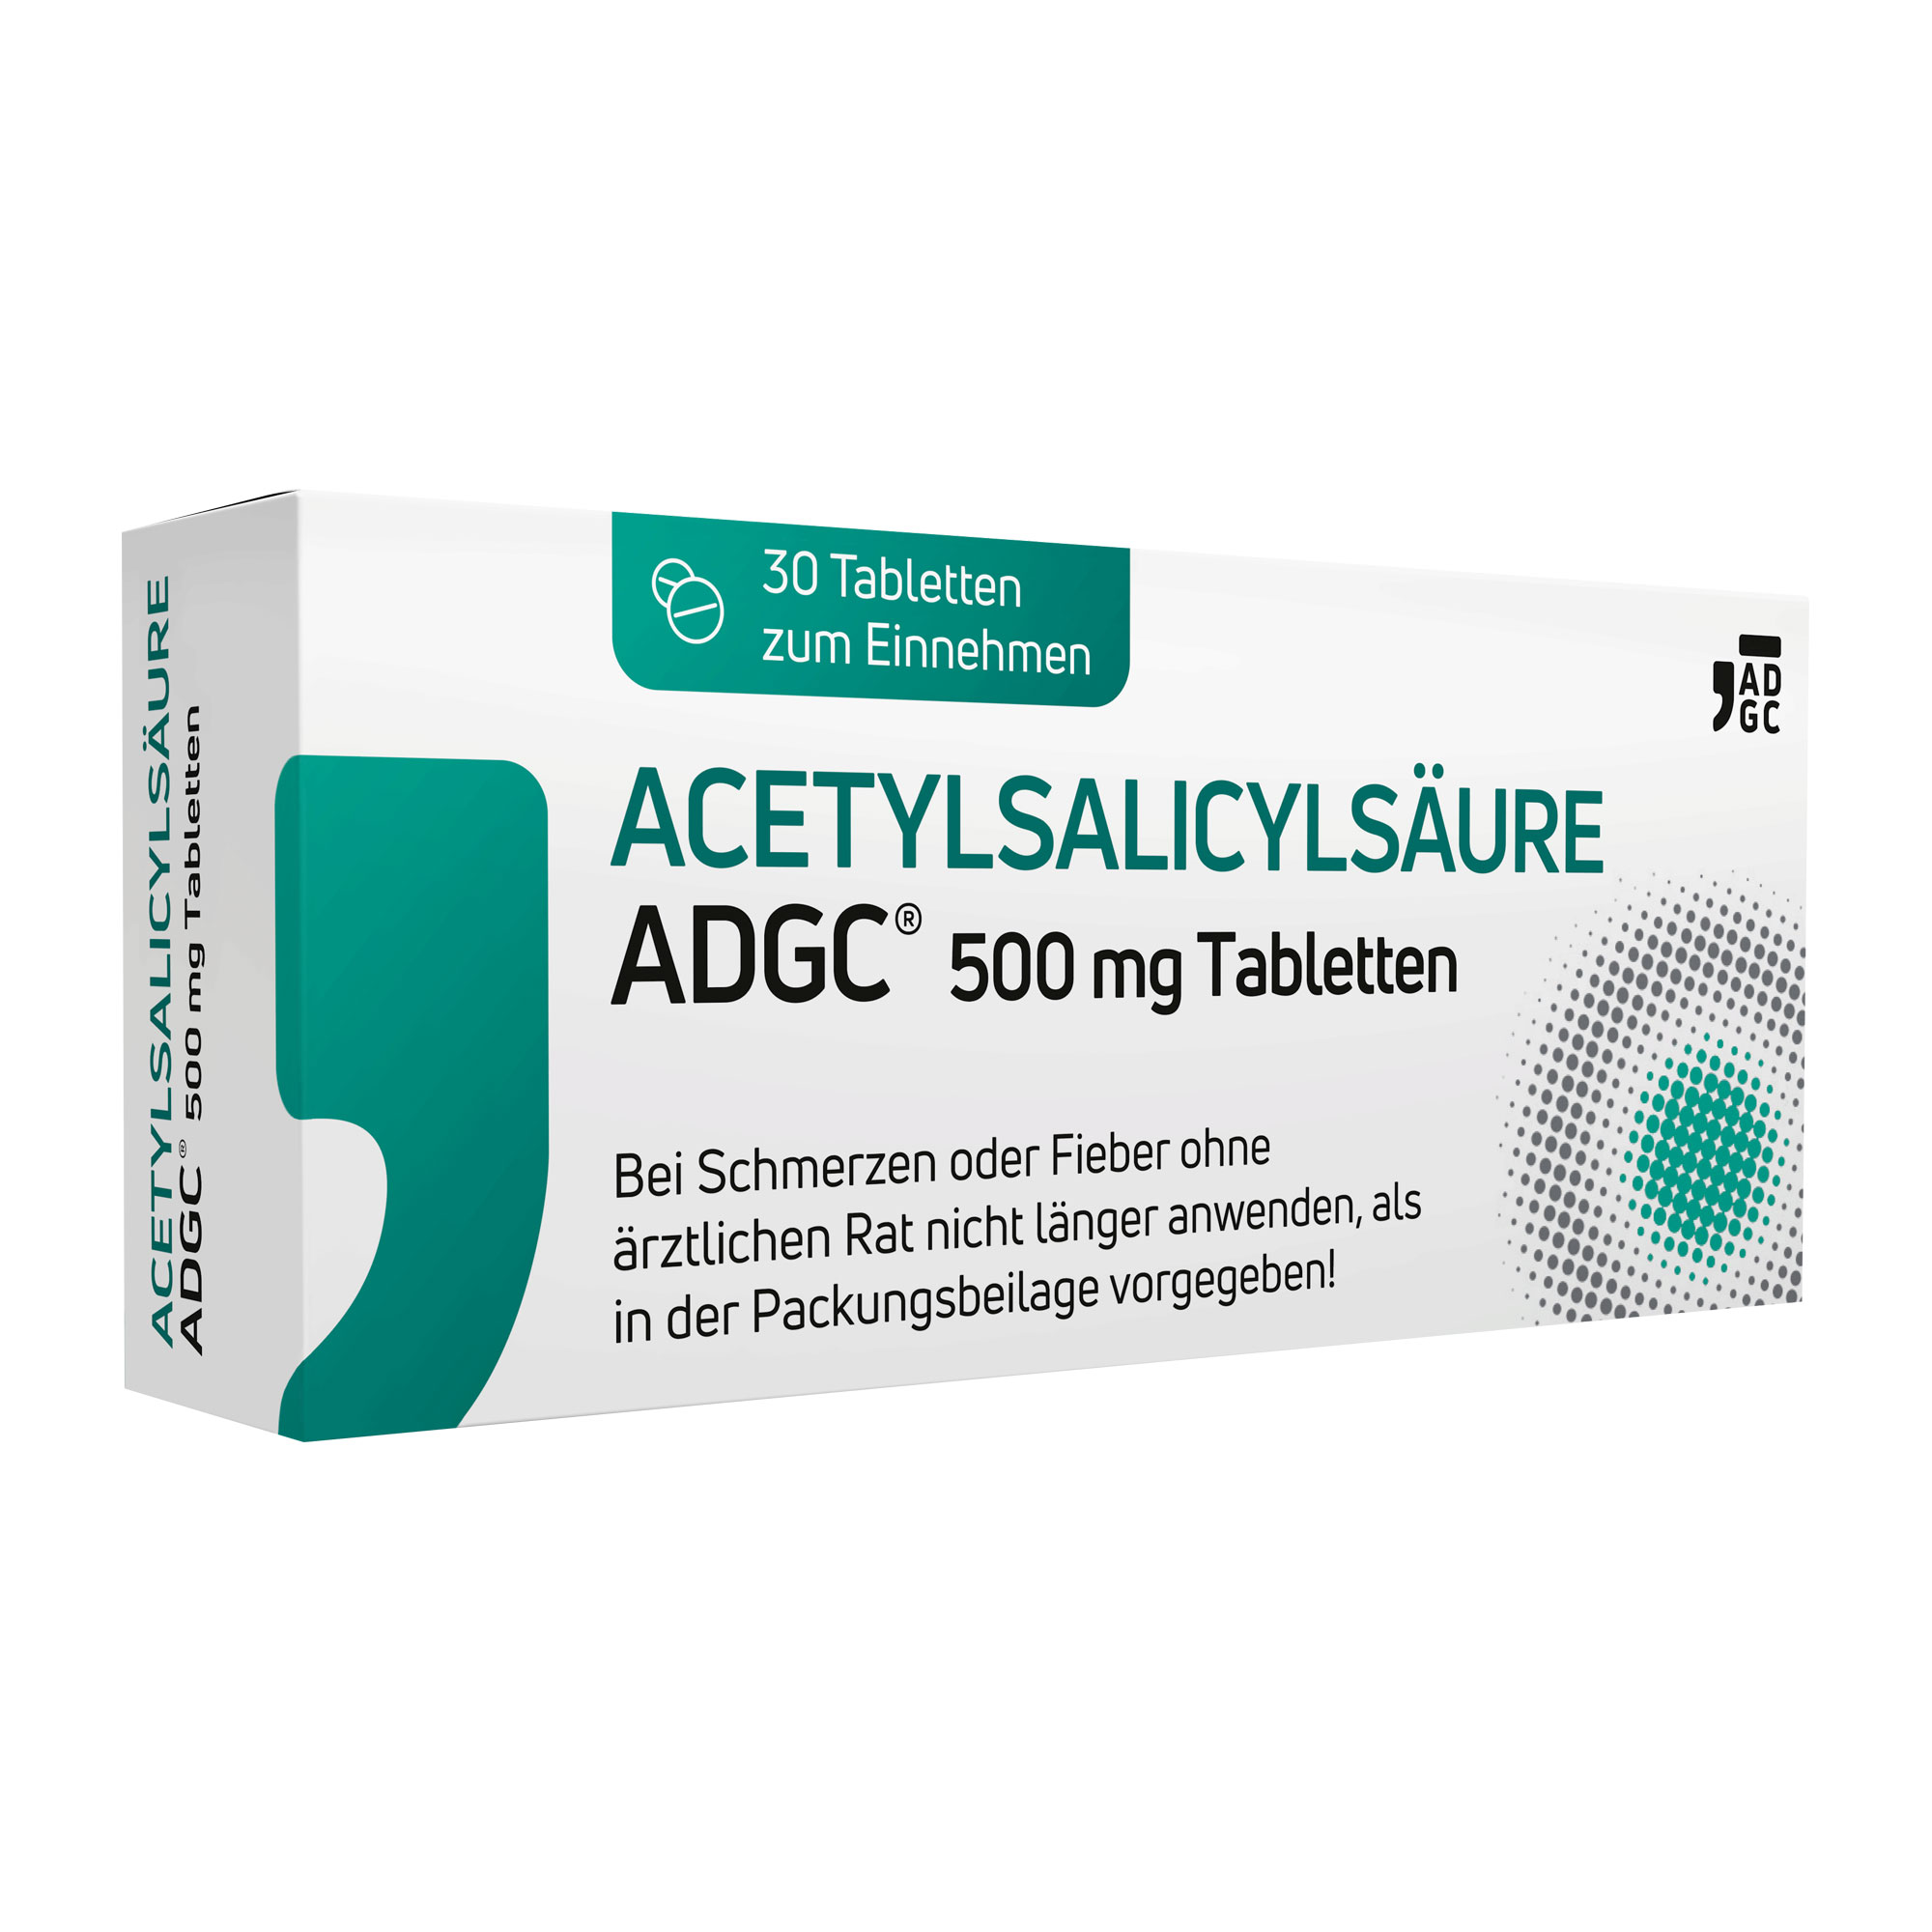 Acetylsalicylsäure ADGC 500 mg Tabletten